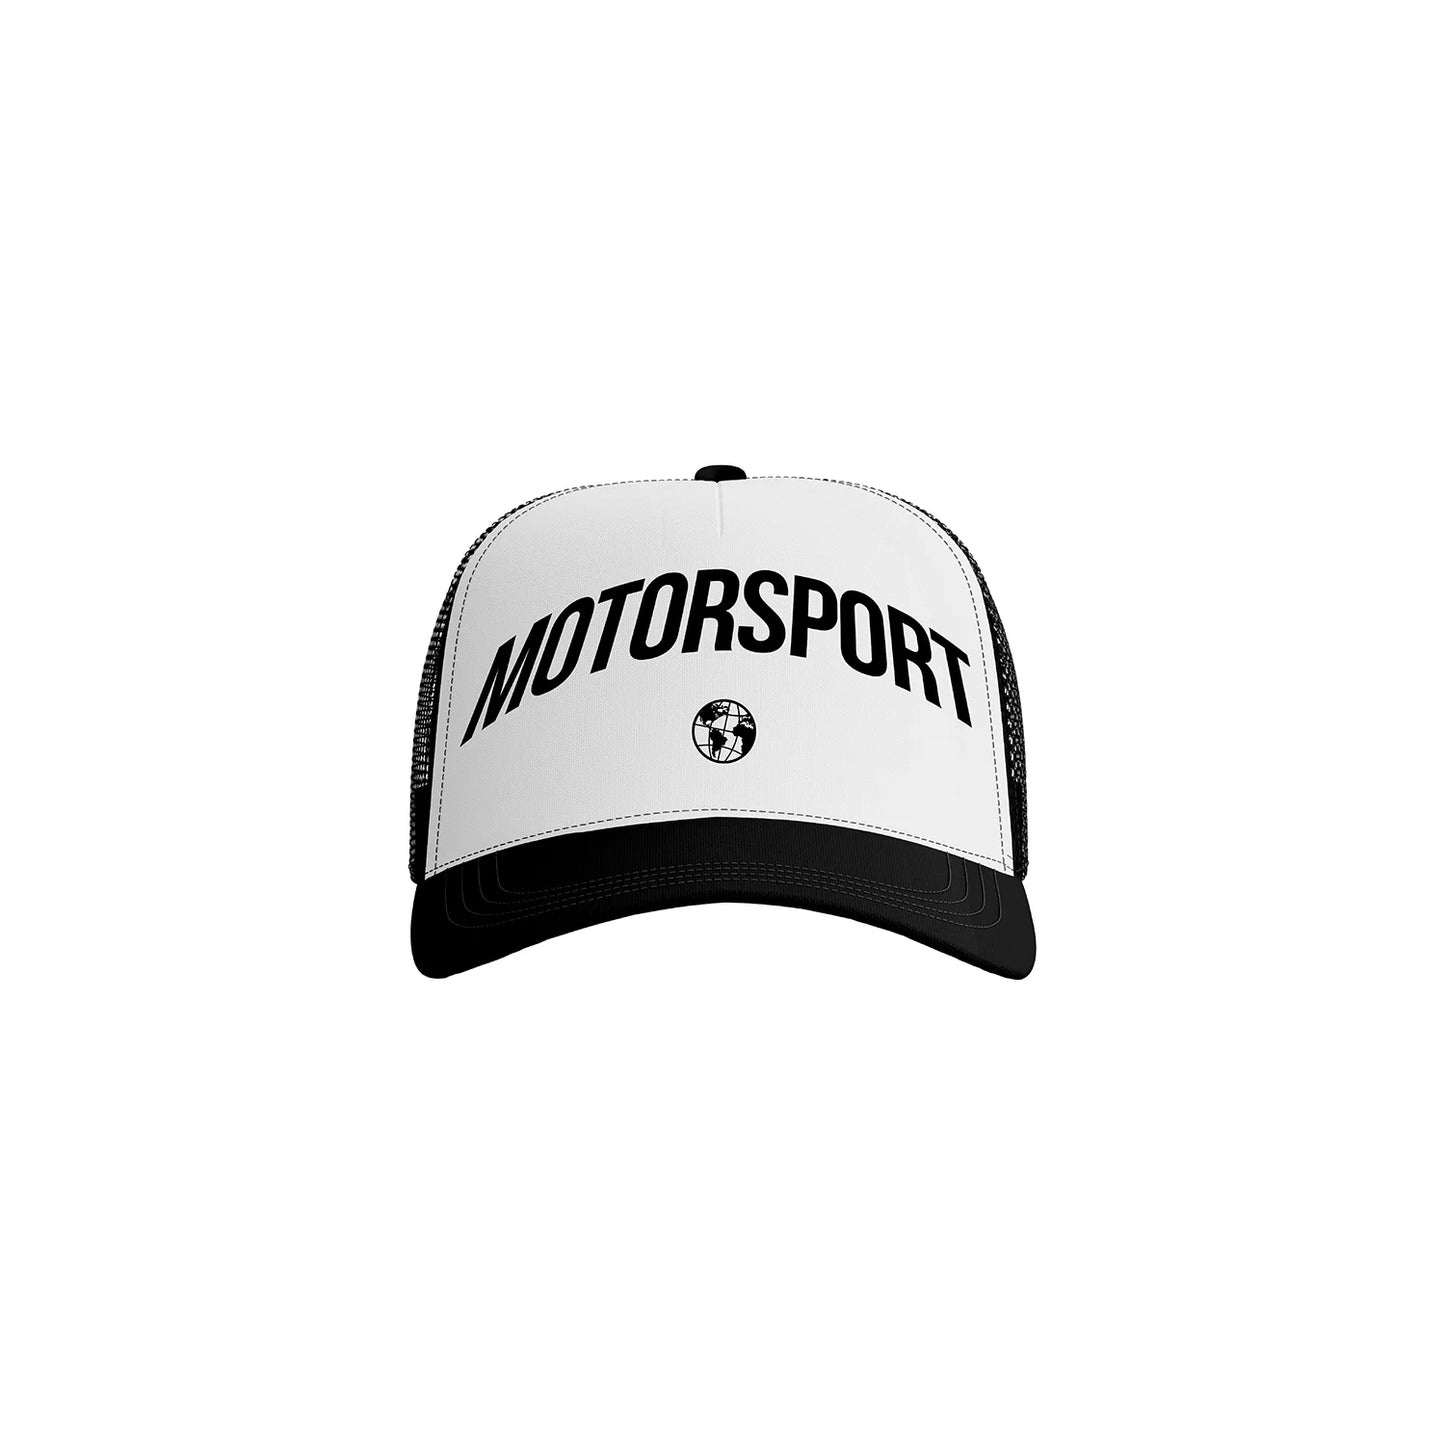 Cap "Motorsport" Black&White